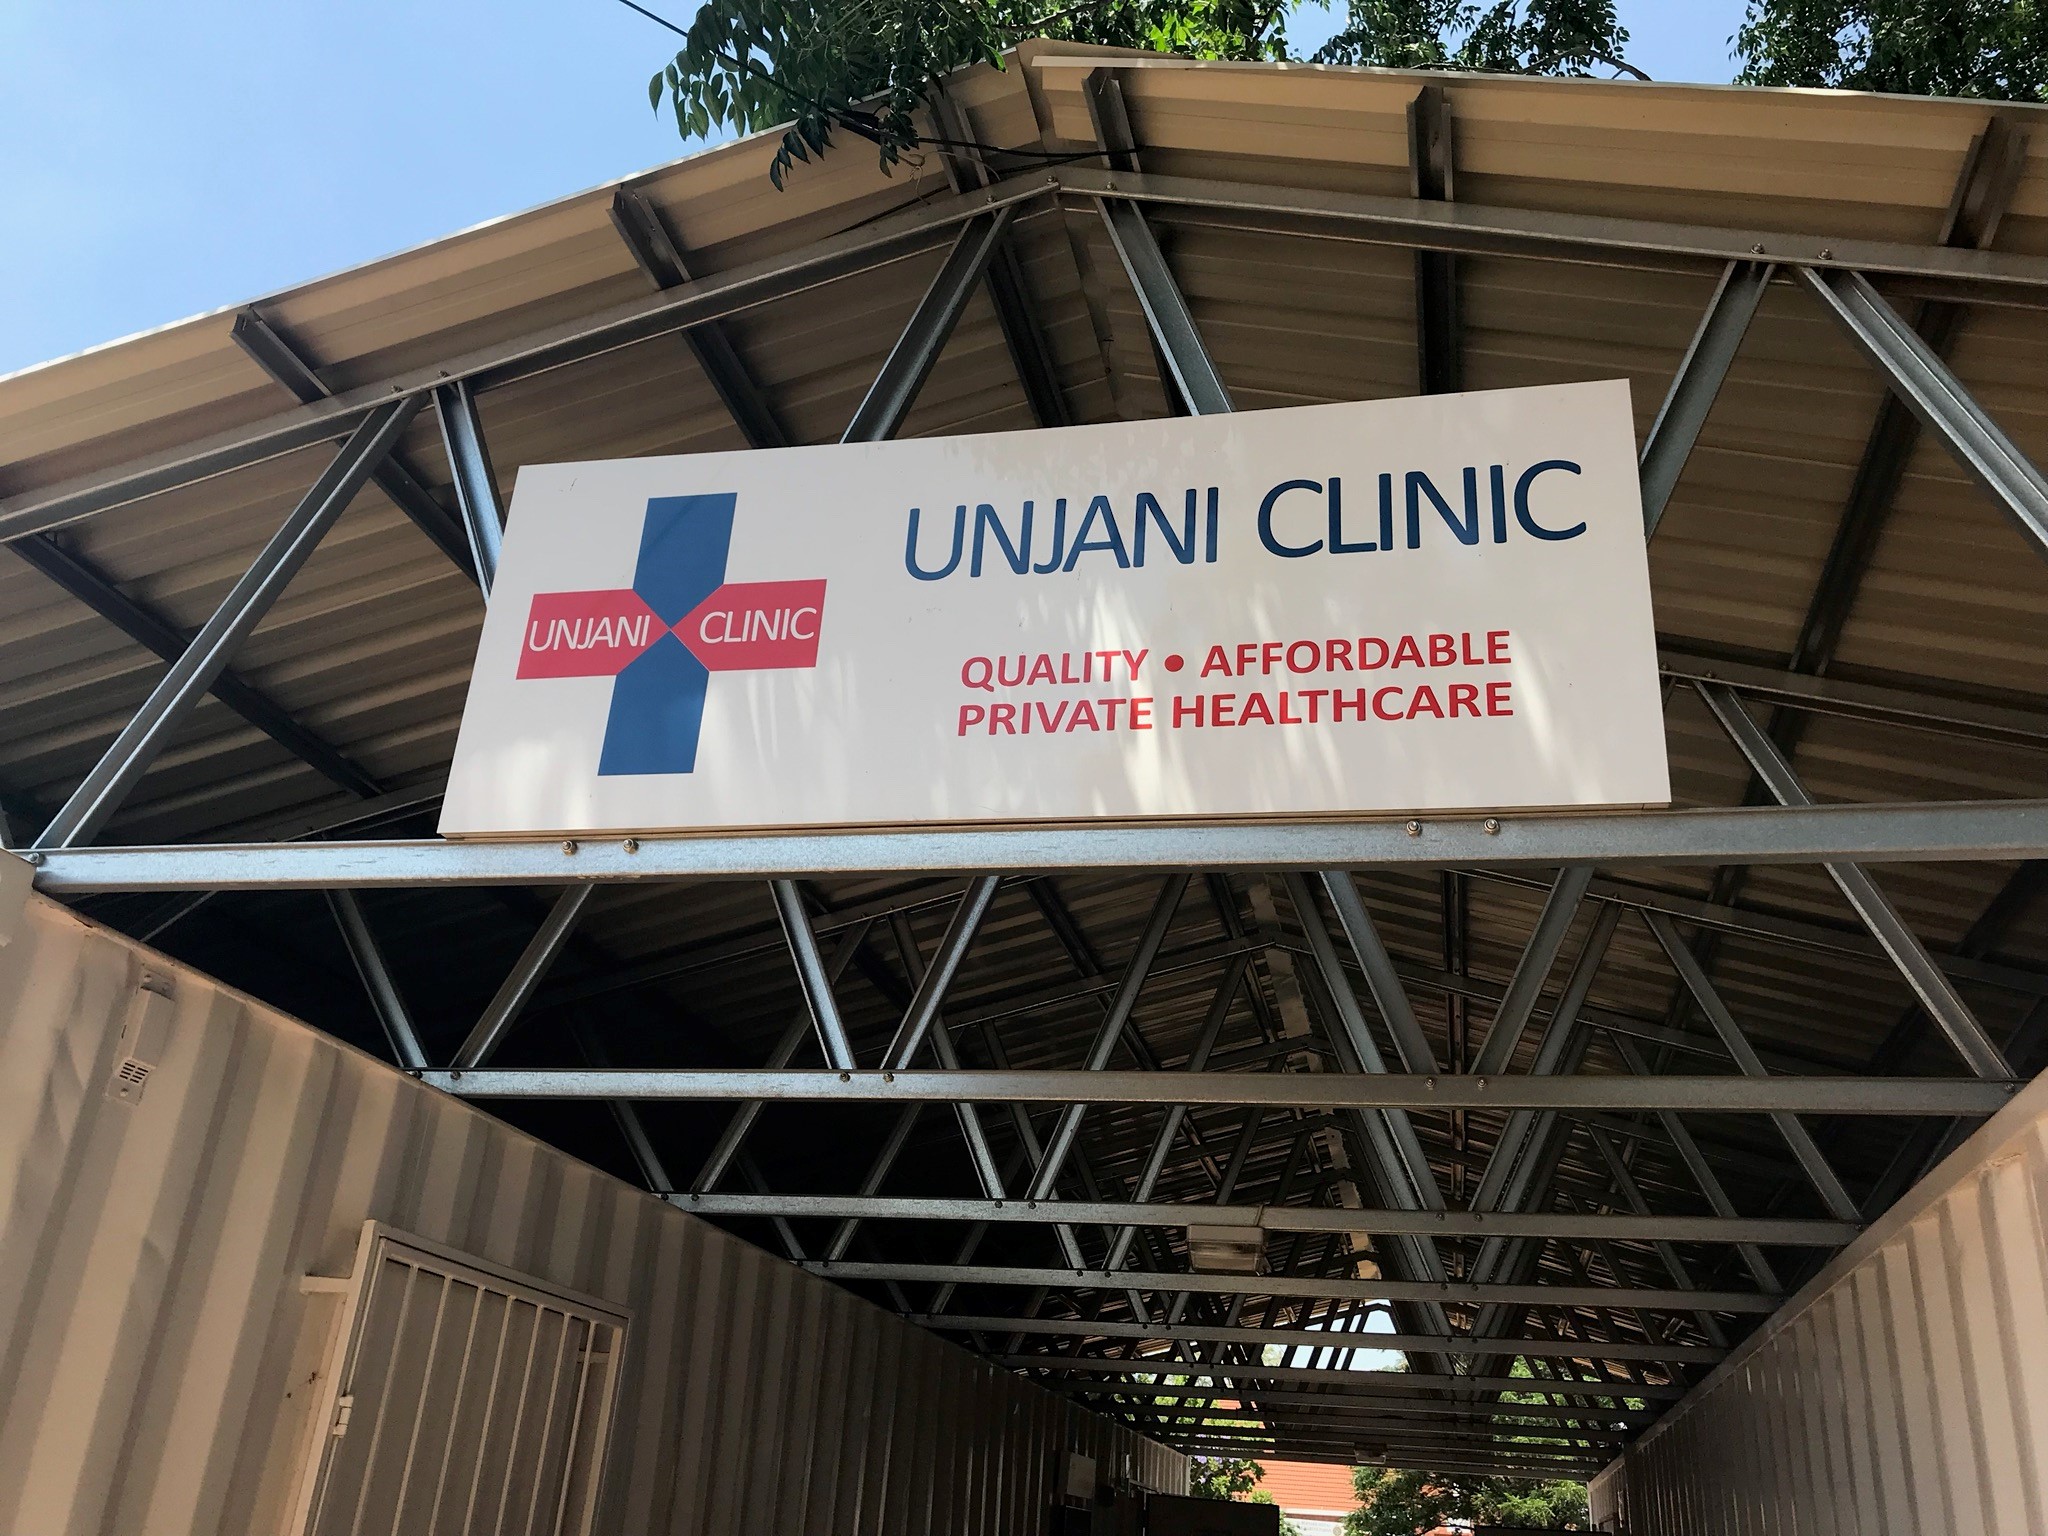 The Unjani Clinic in Atteridgeville, outside Pretoria, South Africa.